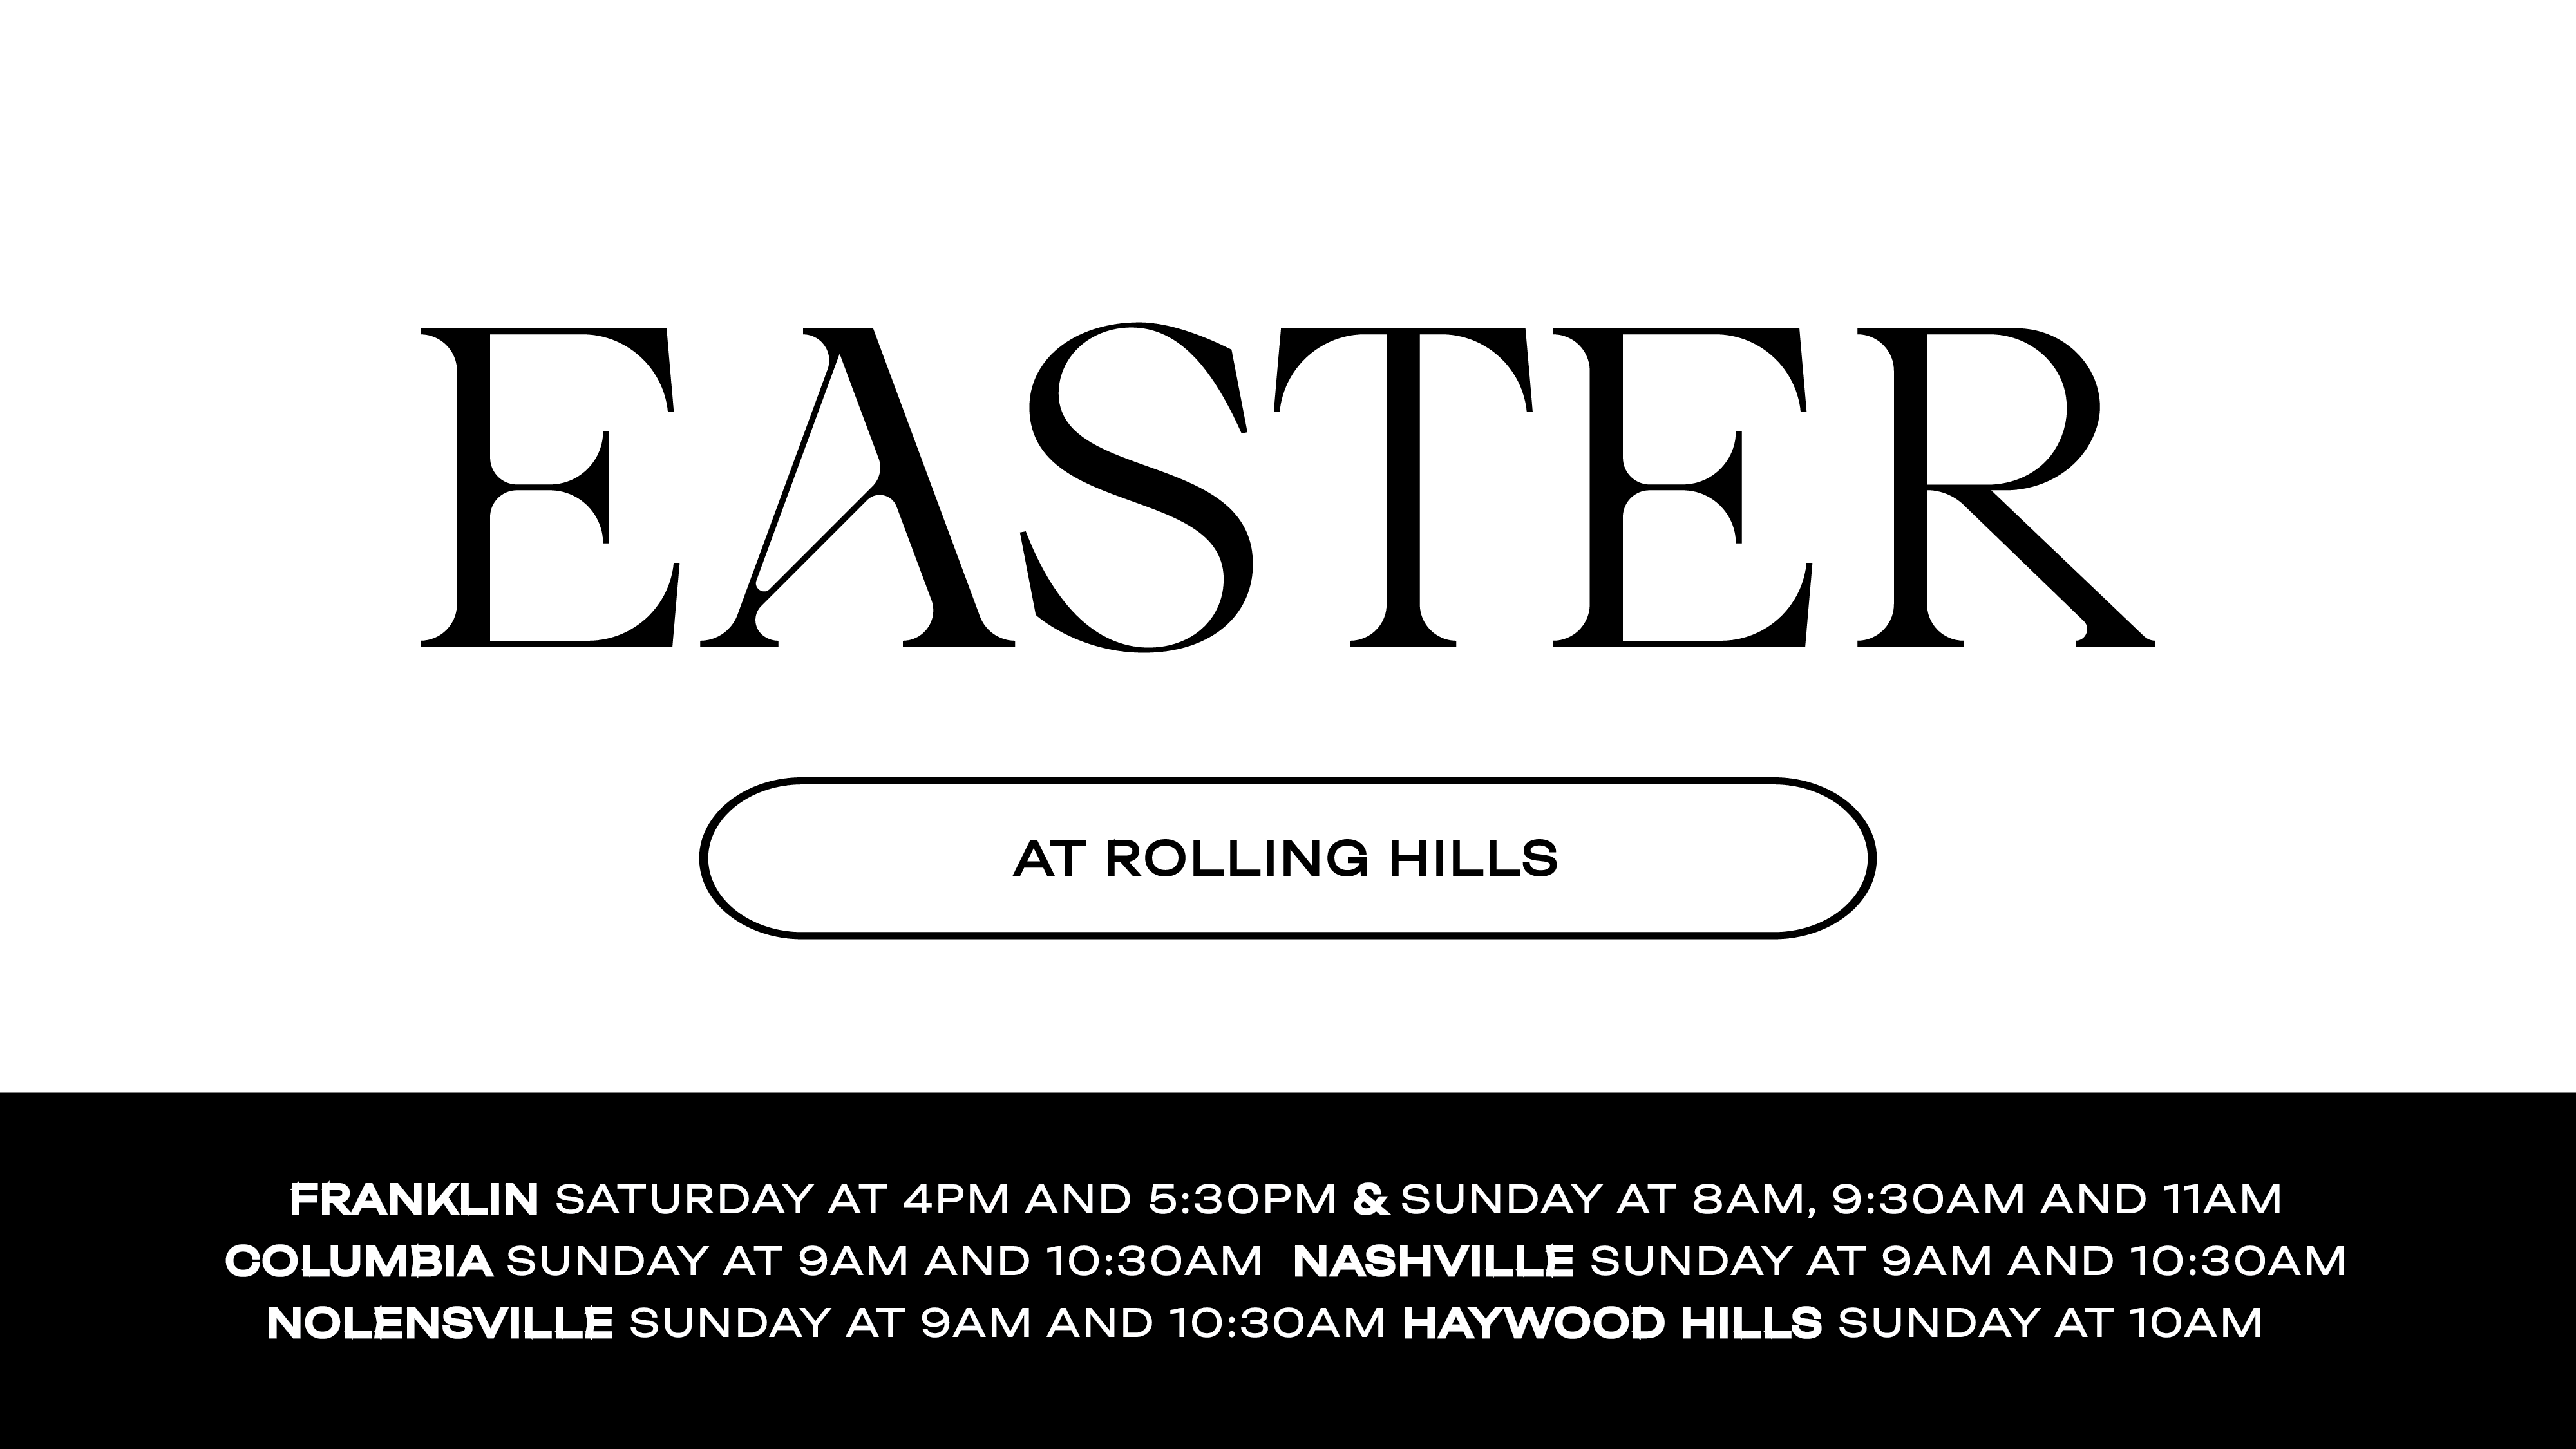 Easter Service | Sunday